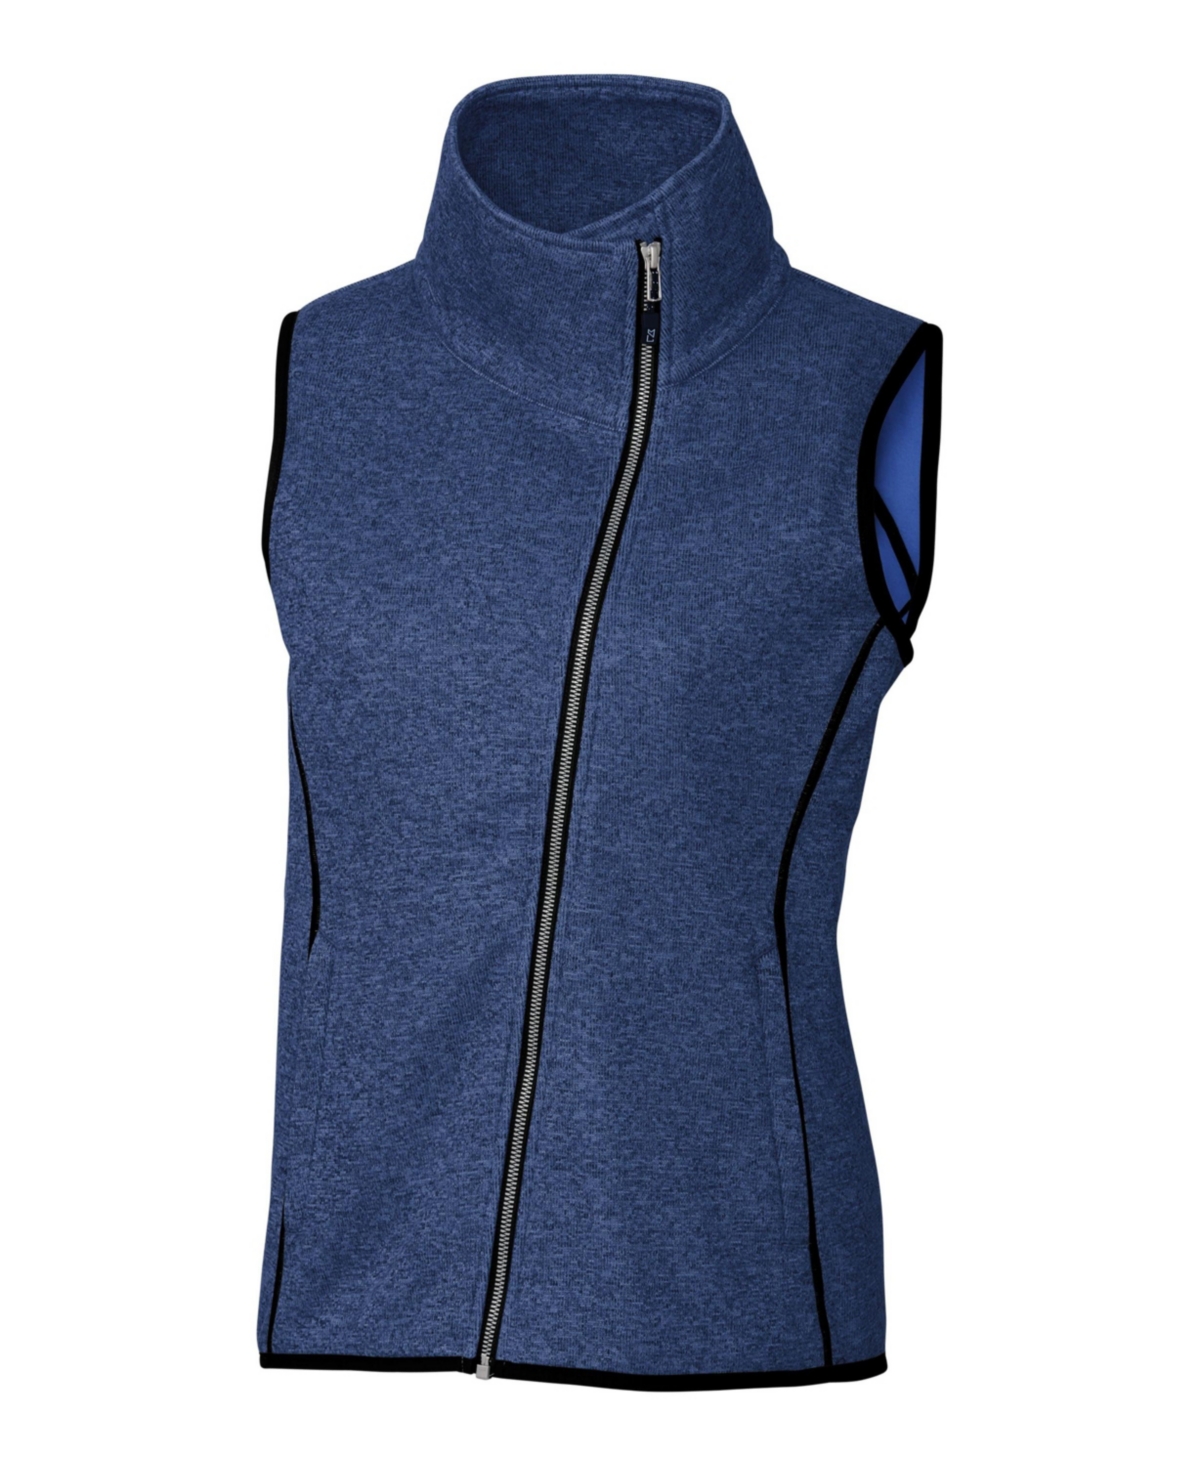 Mainsail Women Plus Size Sweater Knit Asymmetrical Vest - College purple heather